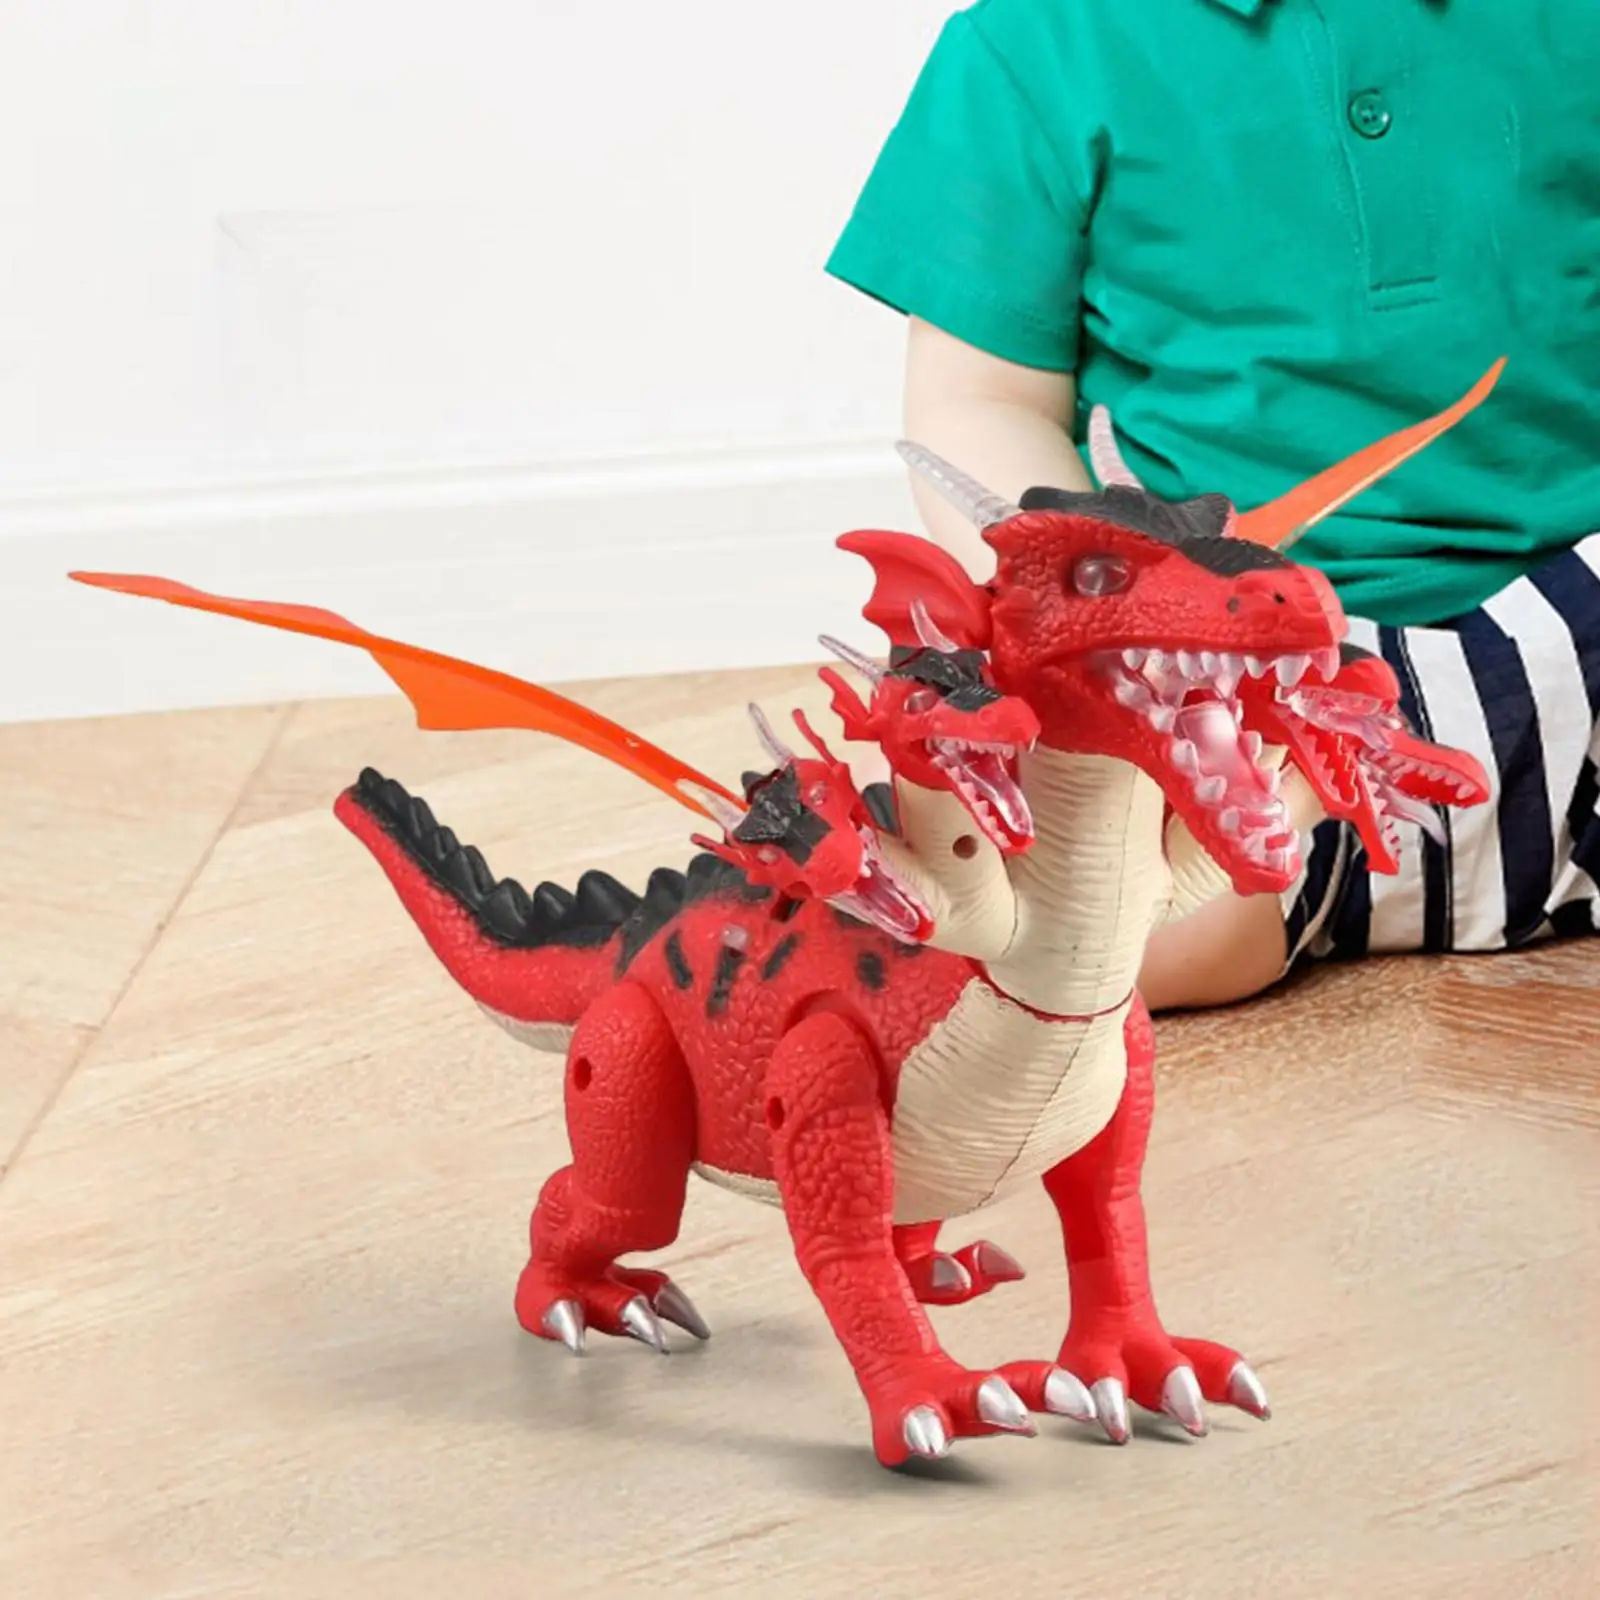 Electric Dinosaur Toys Light up Roaring Sound Spraying Walking Robot Dinosaur Educational Toys Outdoor Toys Preschool Toy